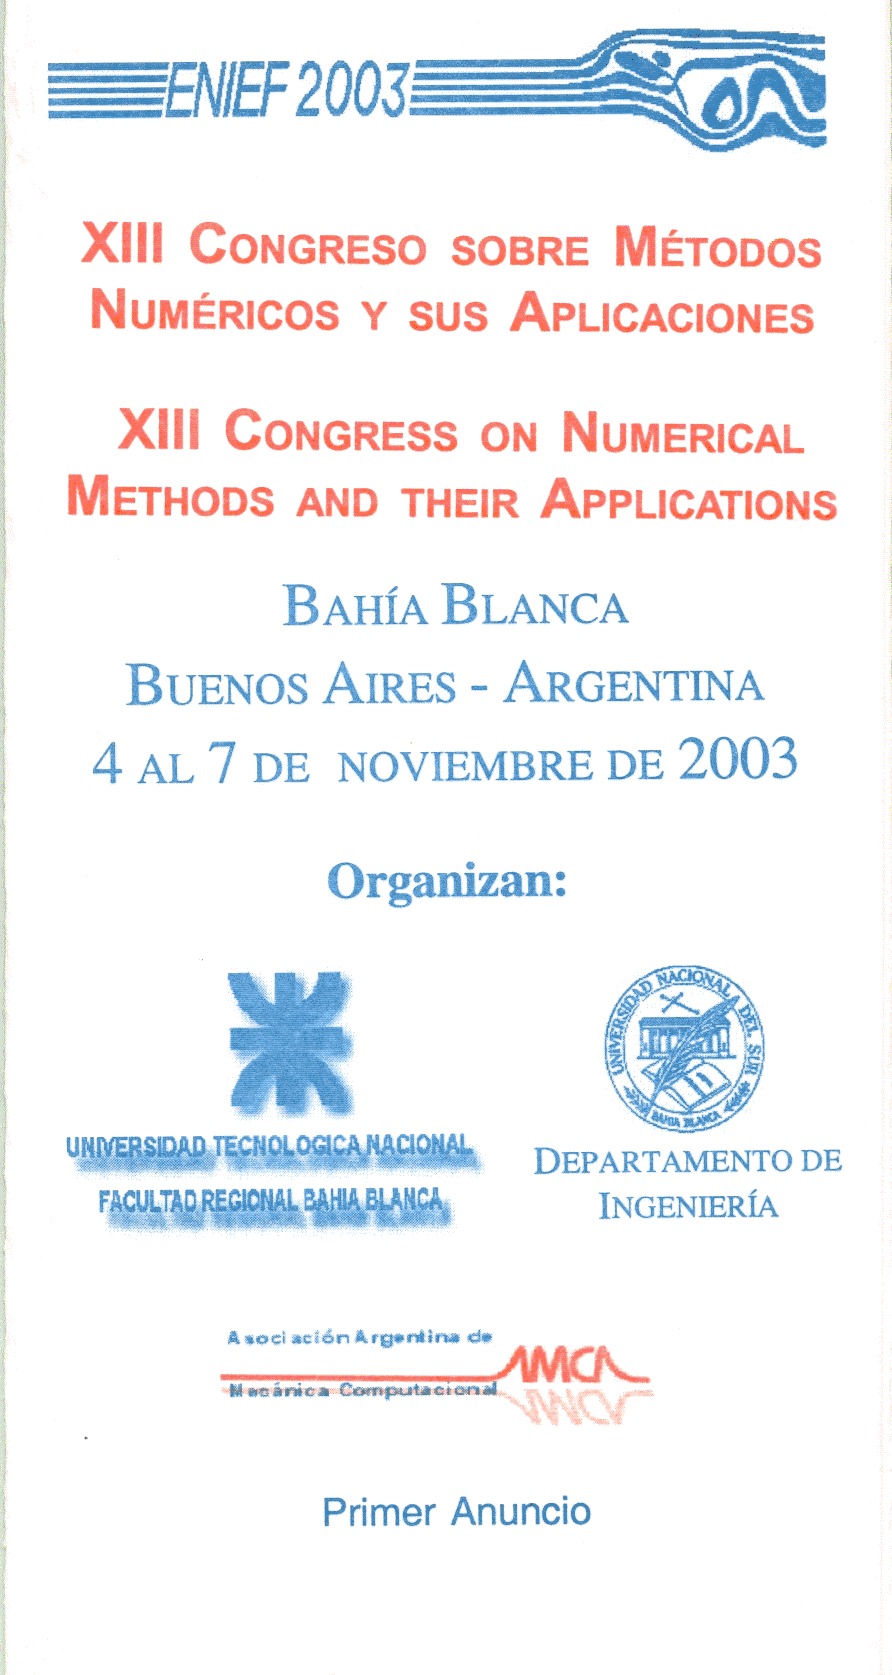 /twiki/pub/AMCA/Congresos/TapaENIEF2003.jpg